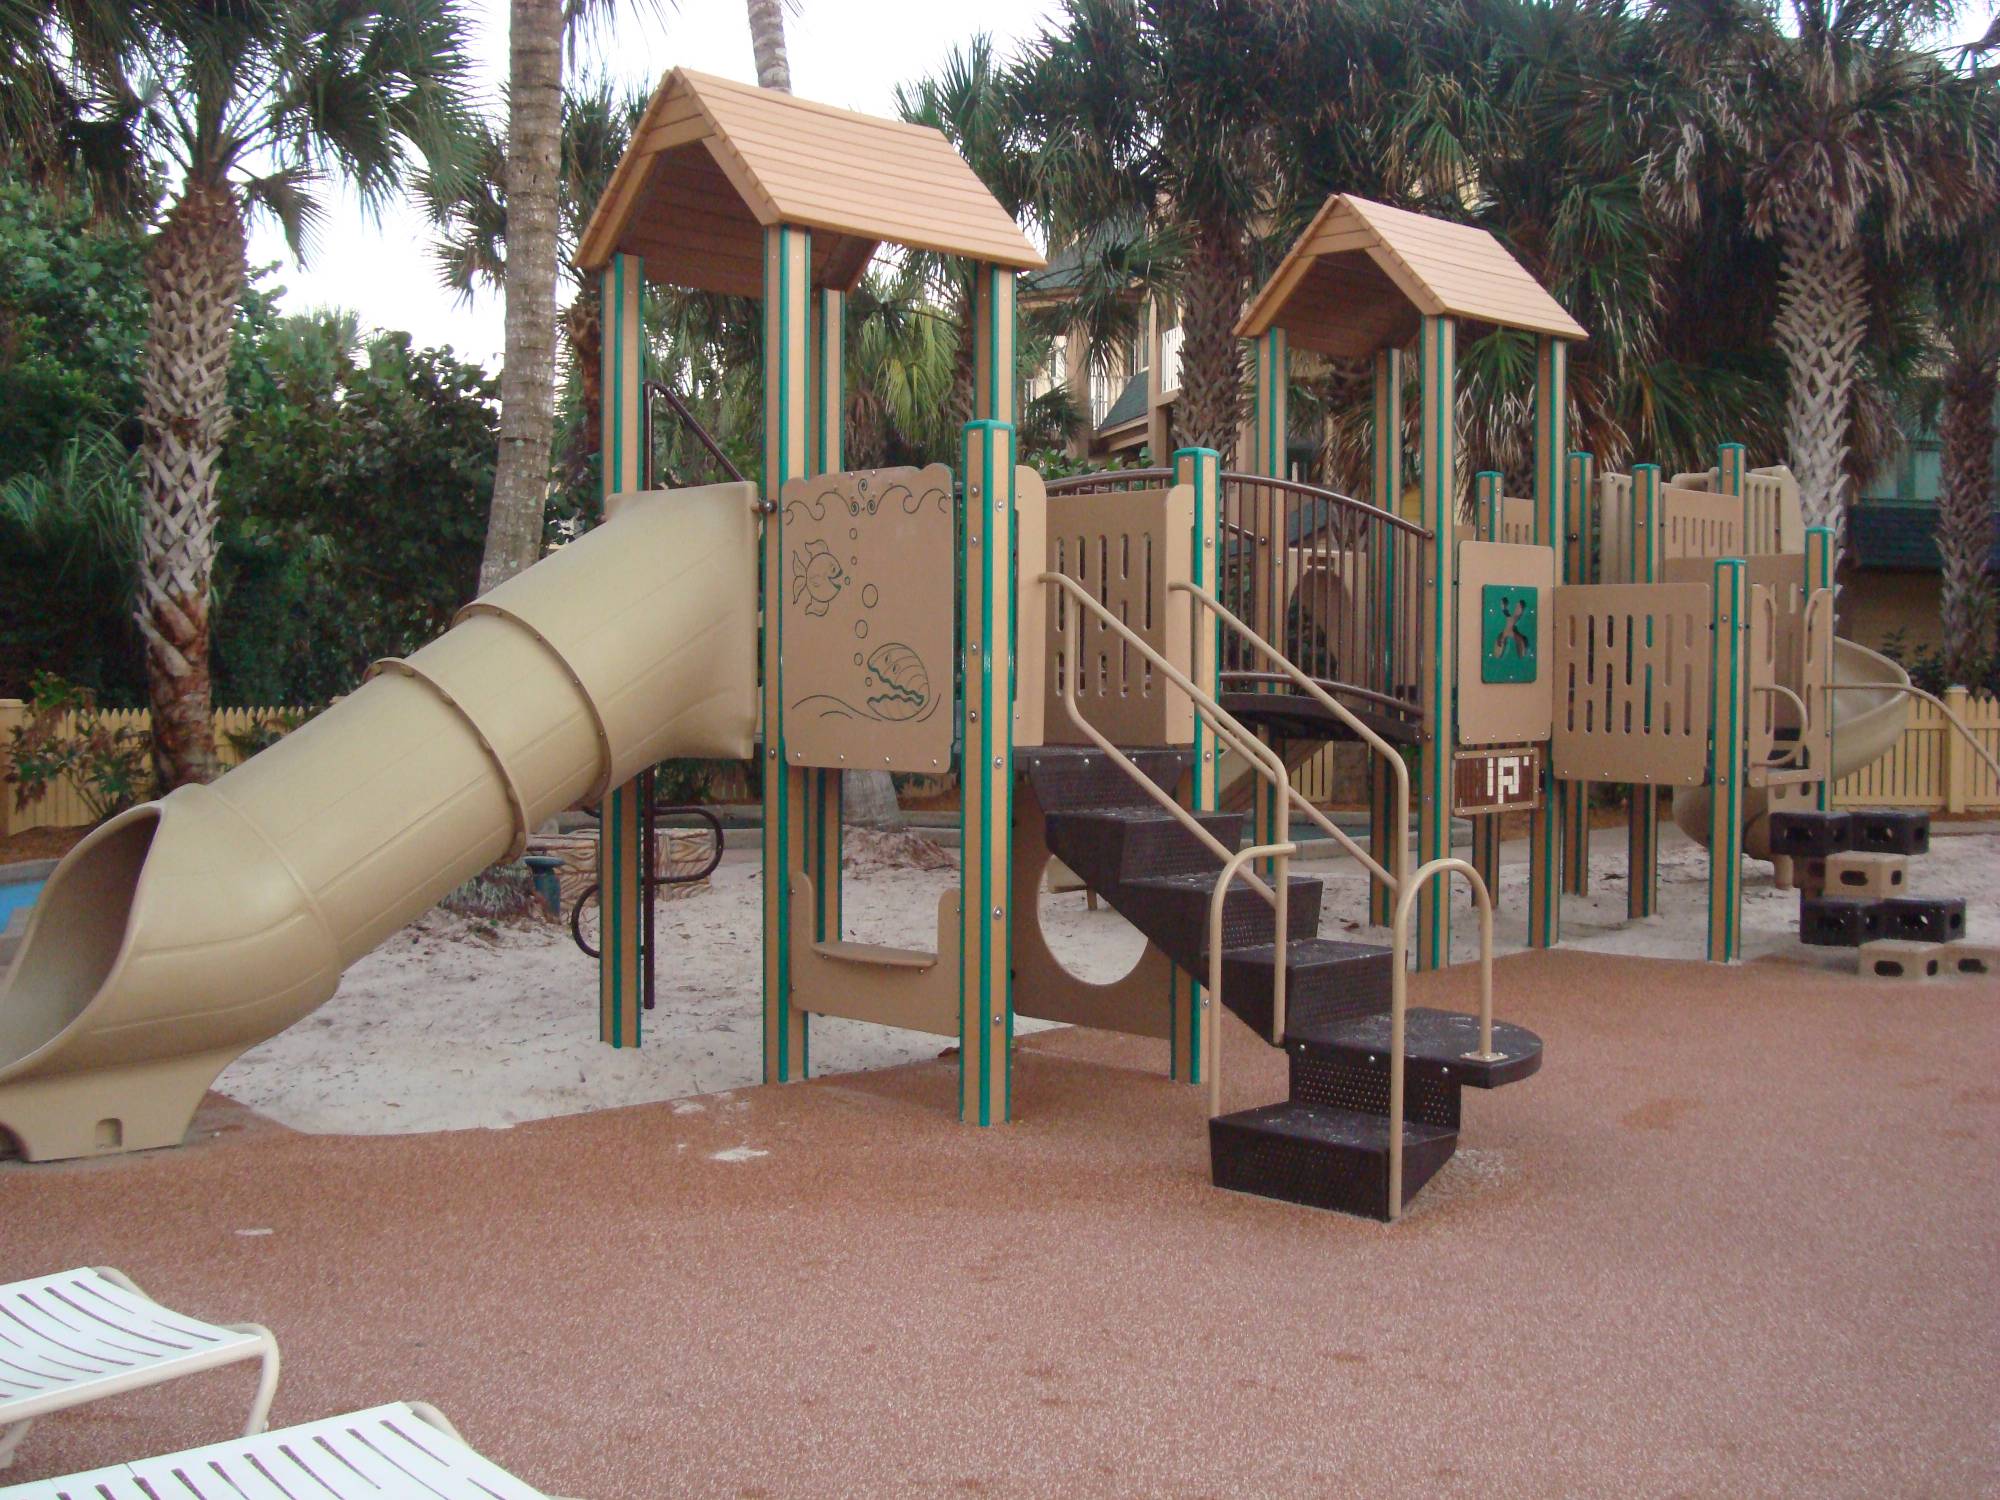 Vero Beach - children's play area